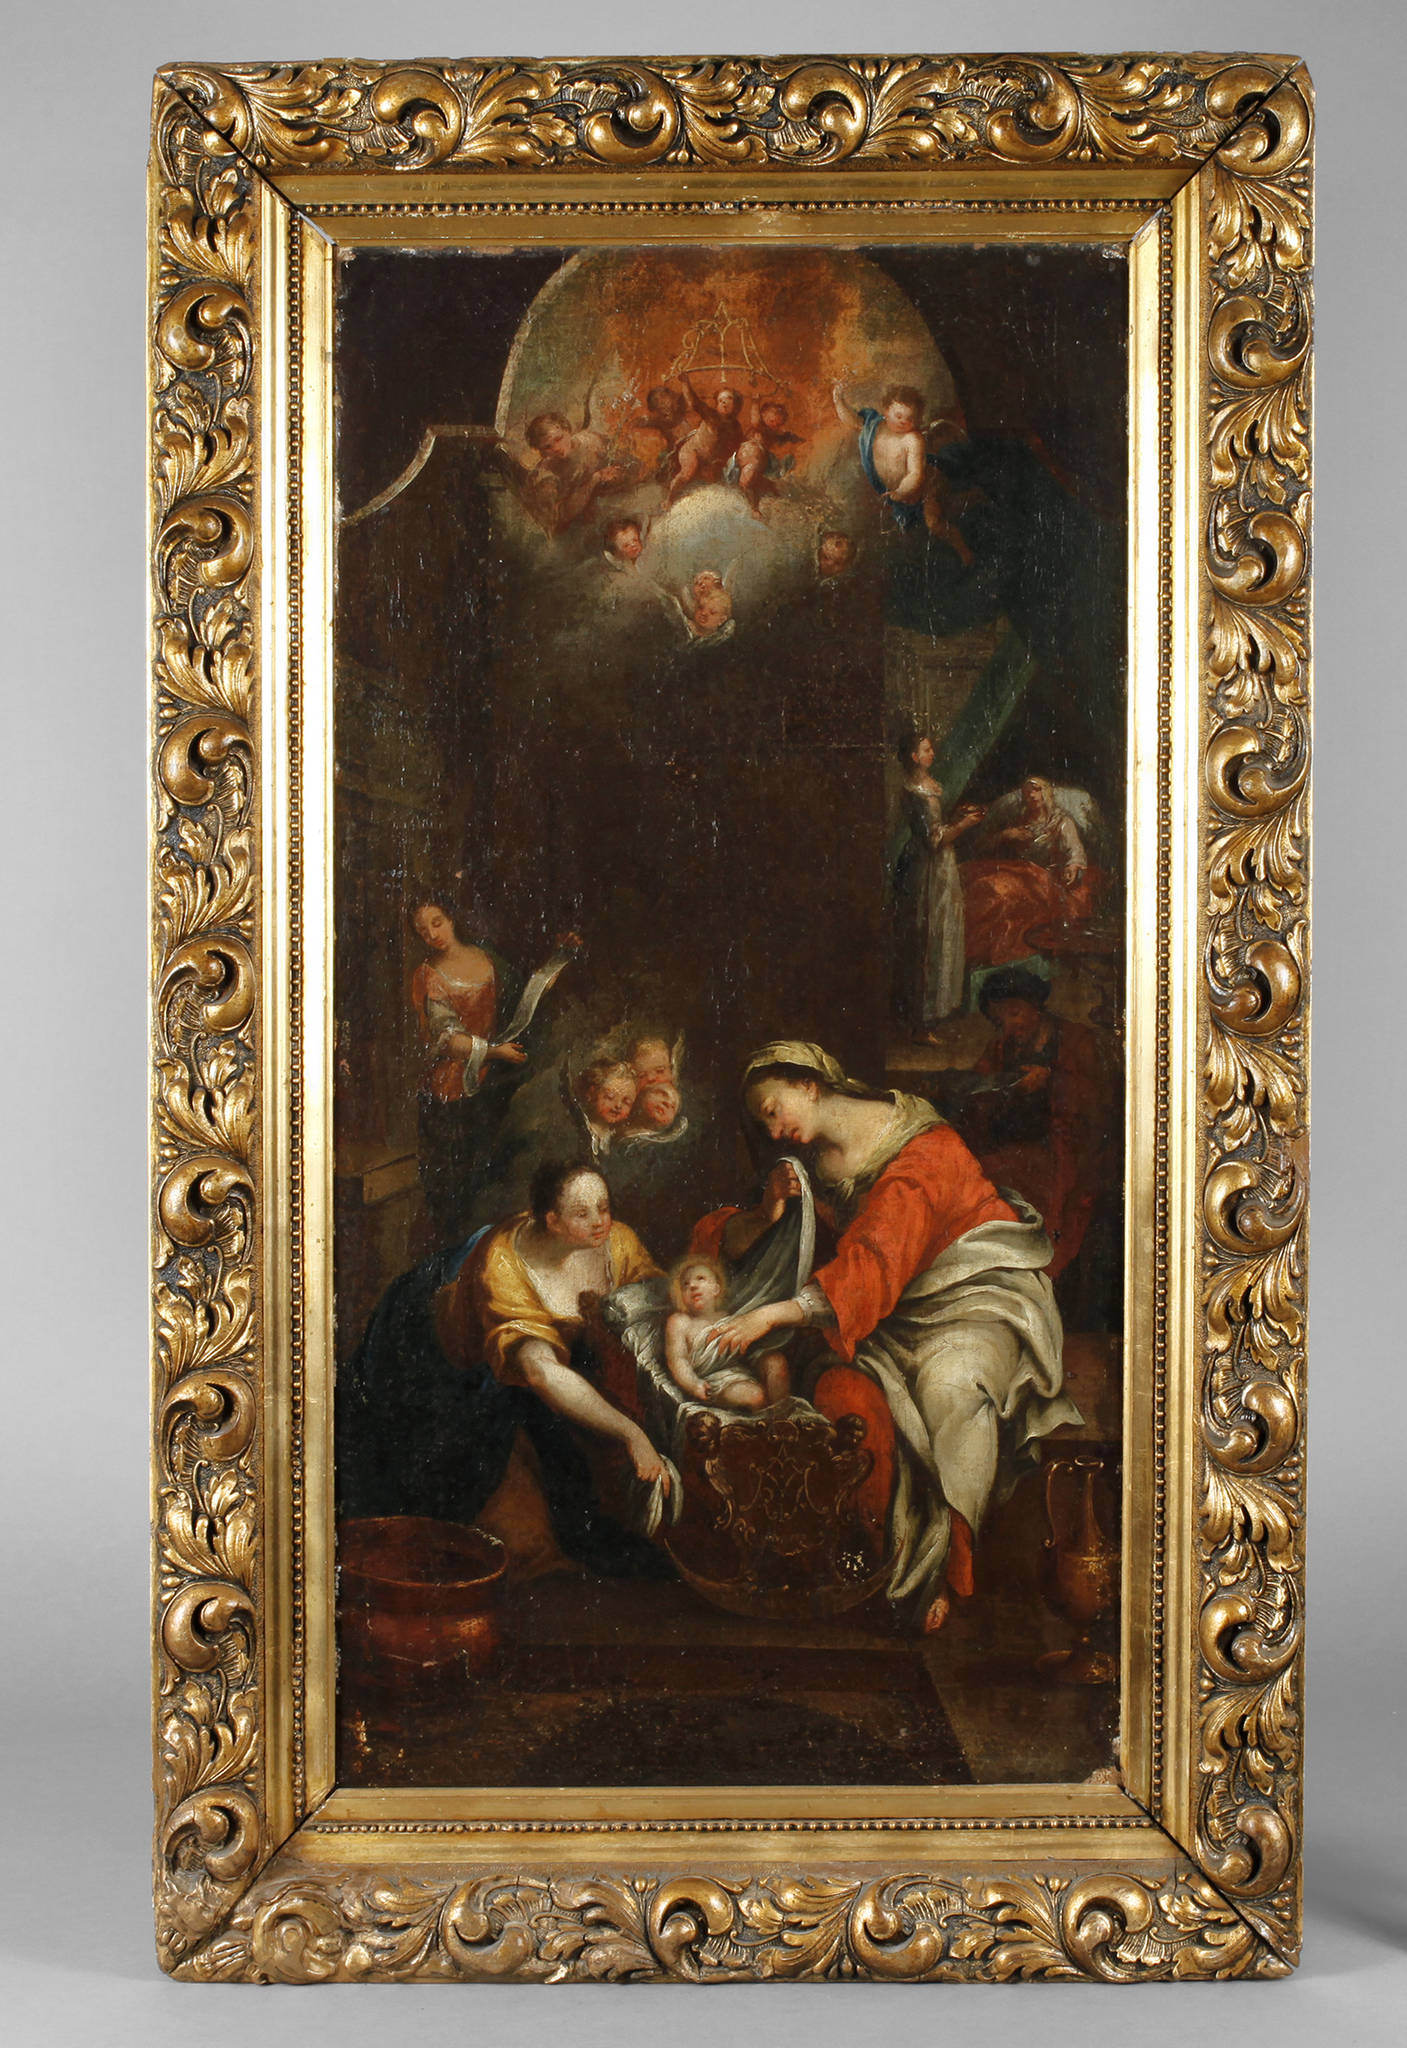 Mariä Geburt, Barock, um 1700